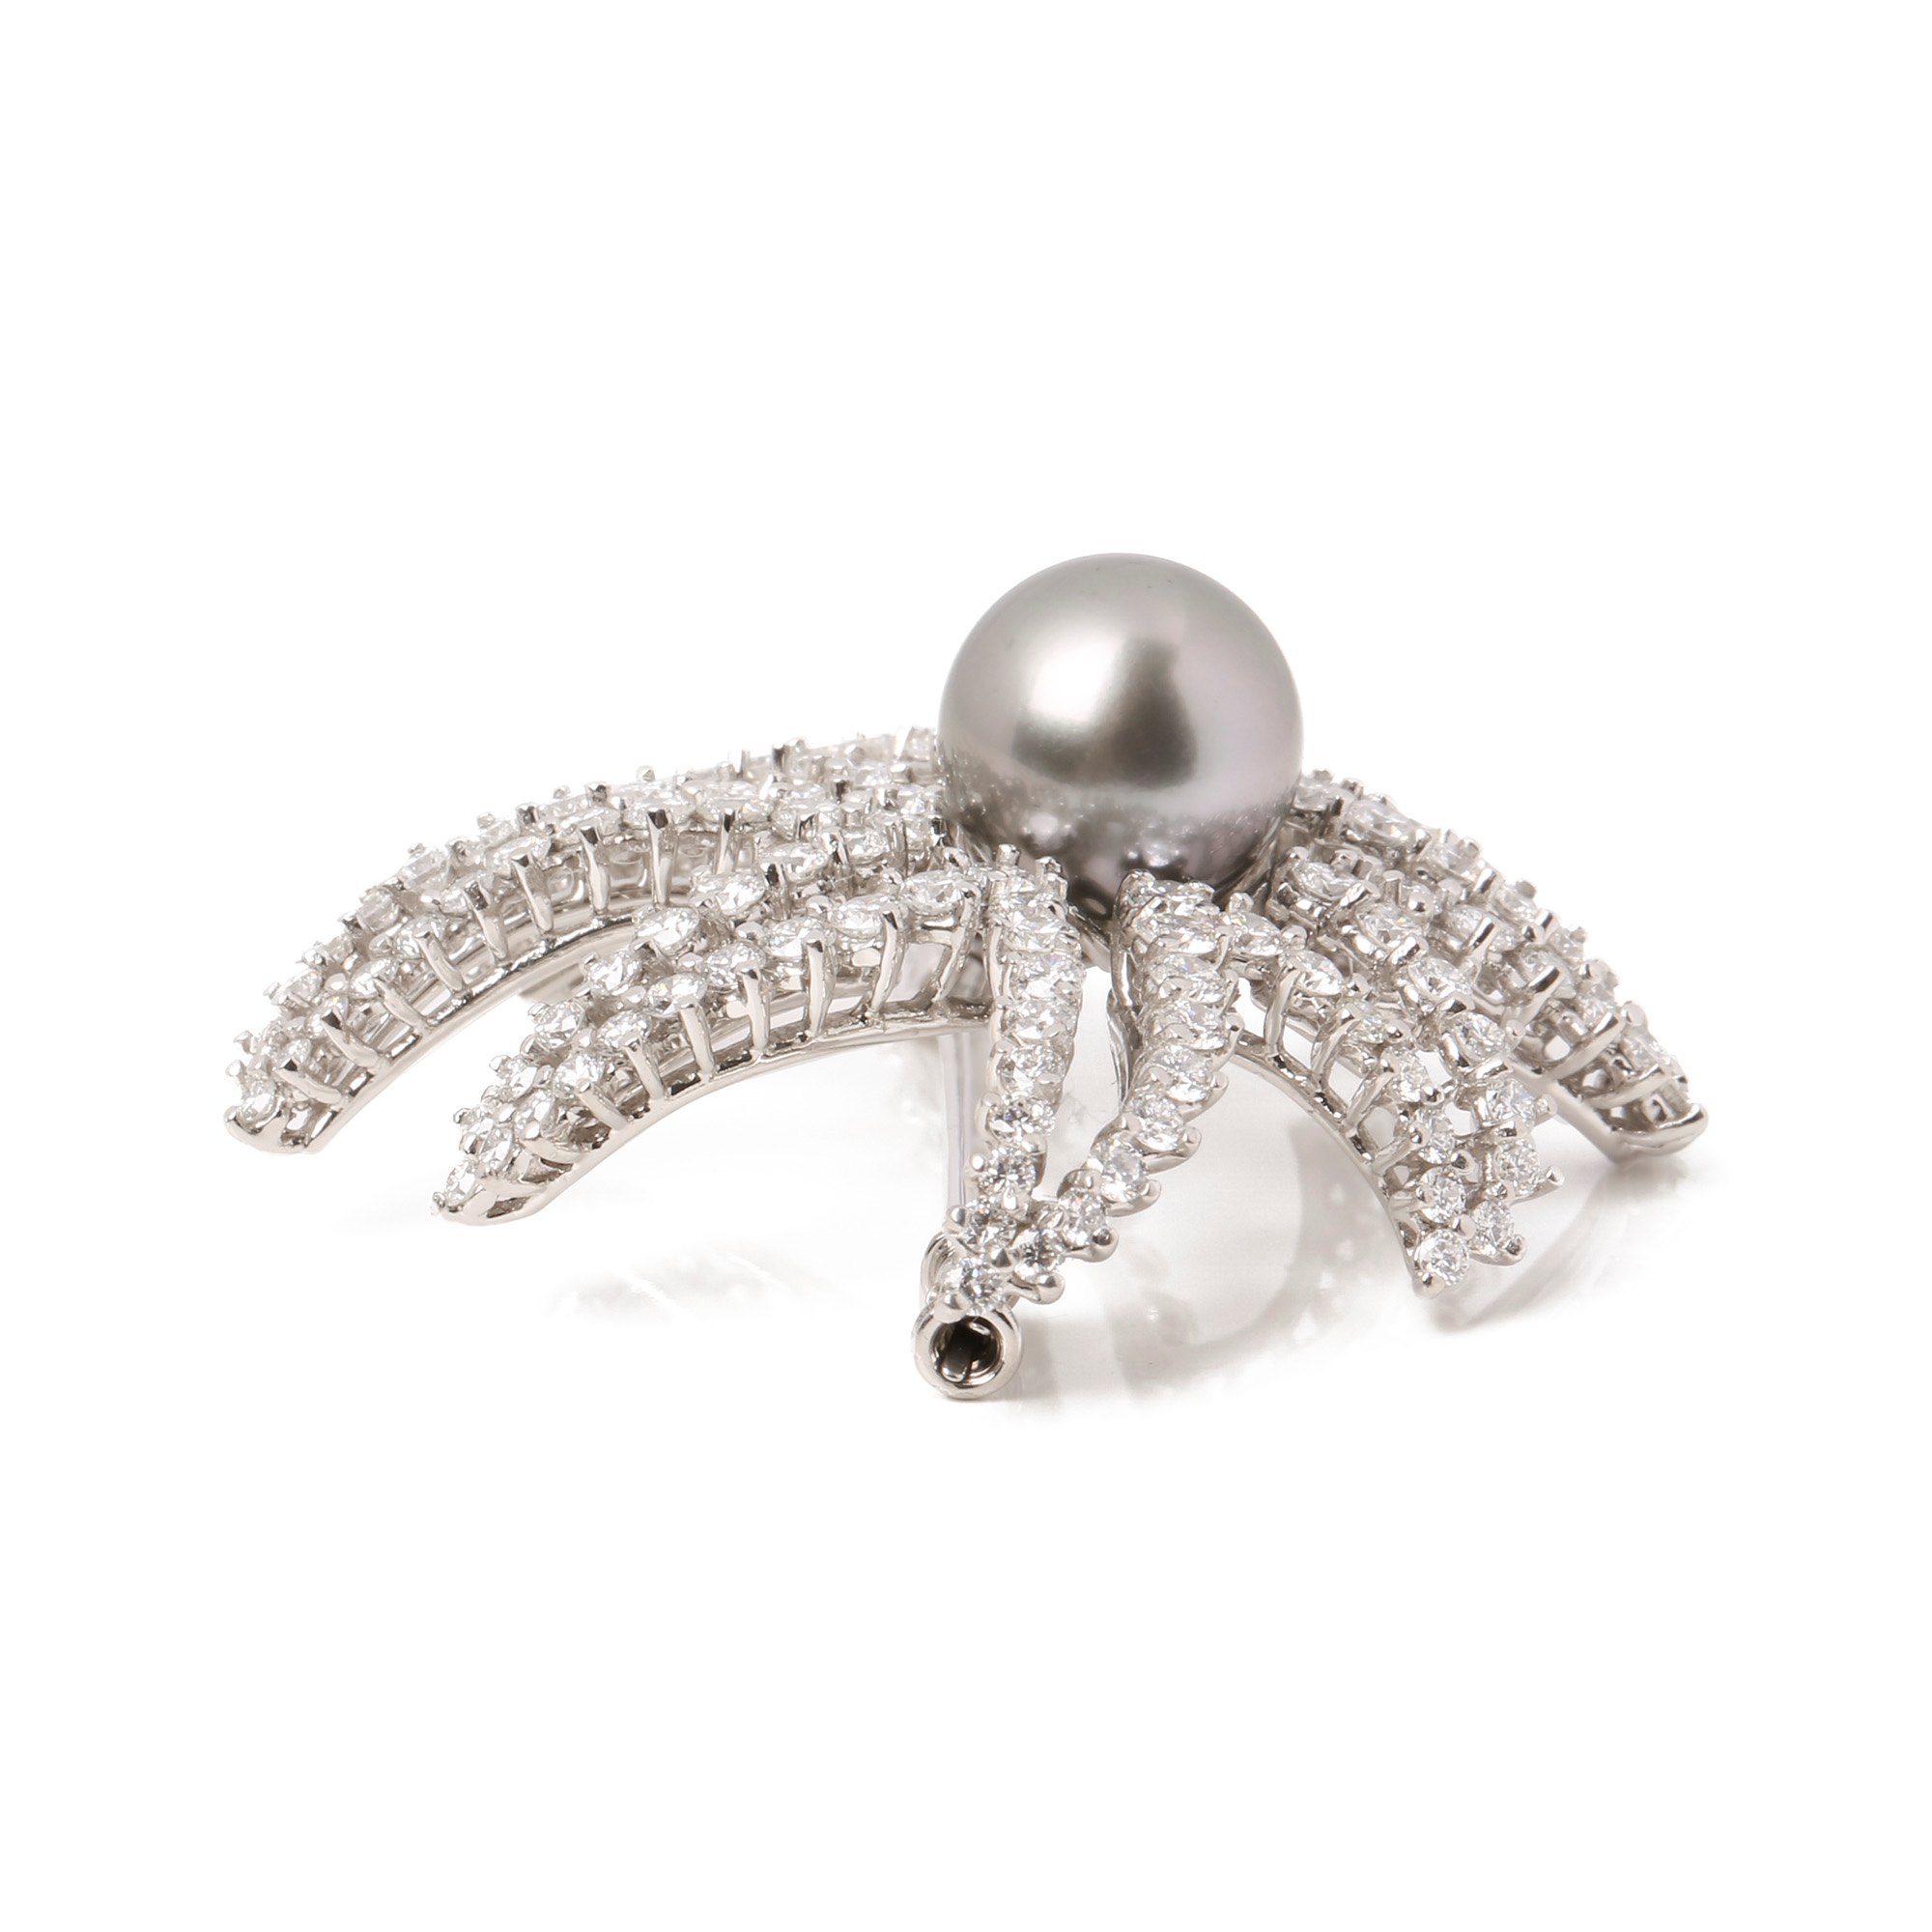 Tiffany & Co. Pearl & diamond fireworks brooch